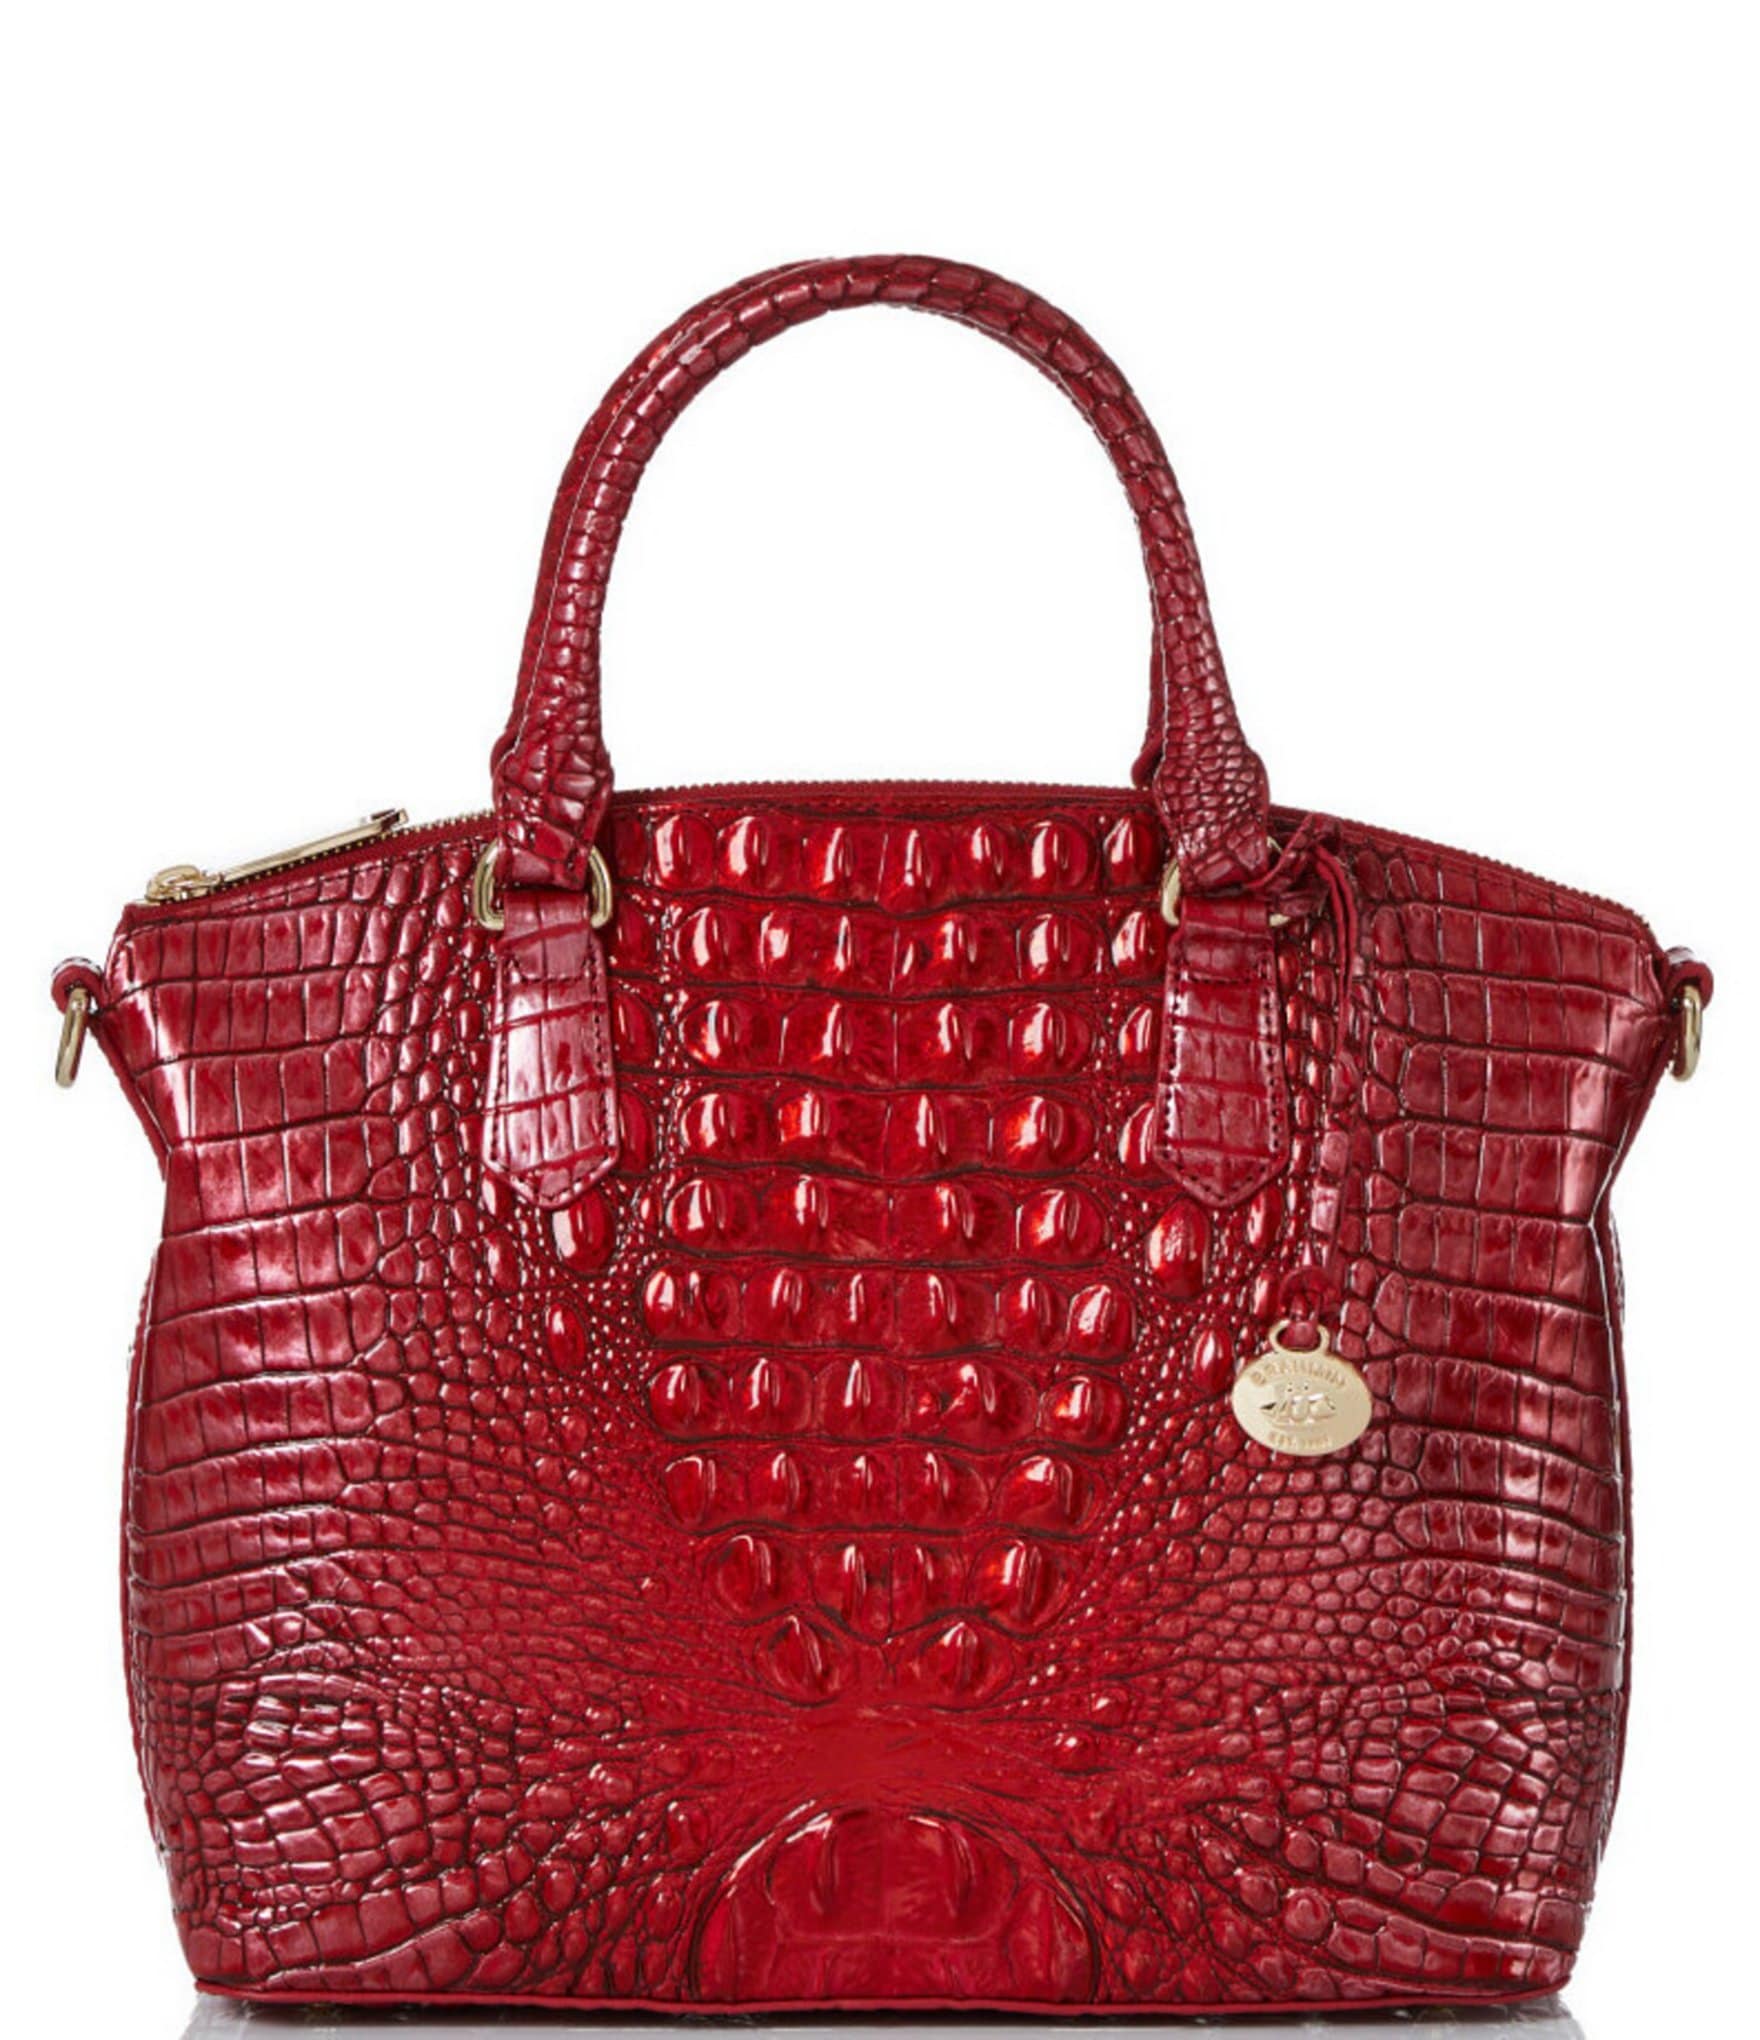 New brahmin duxbury satchel bag purse on Mercari